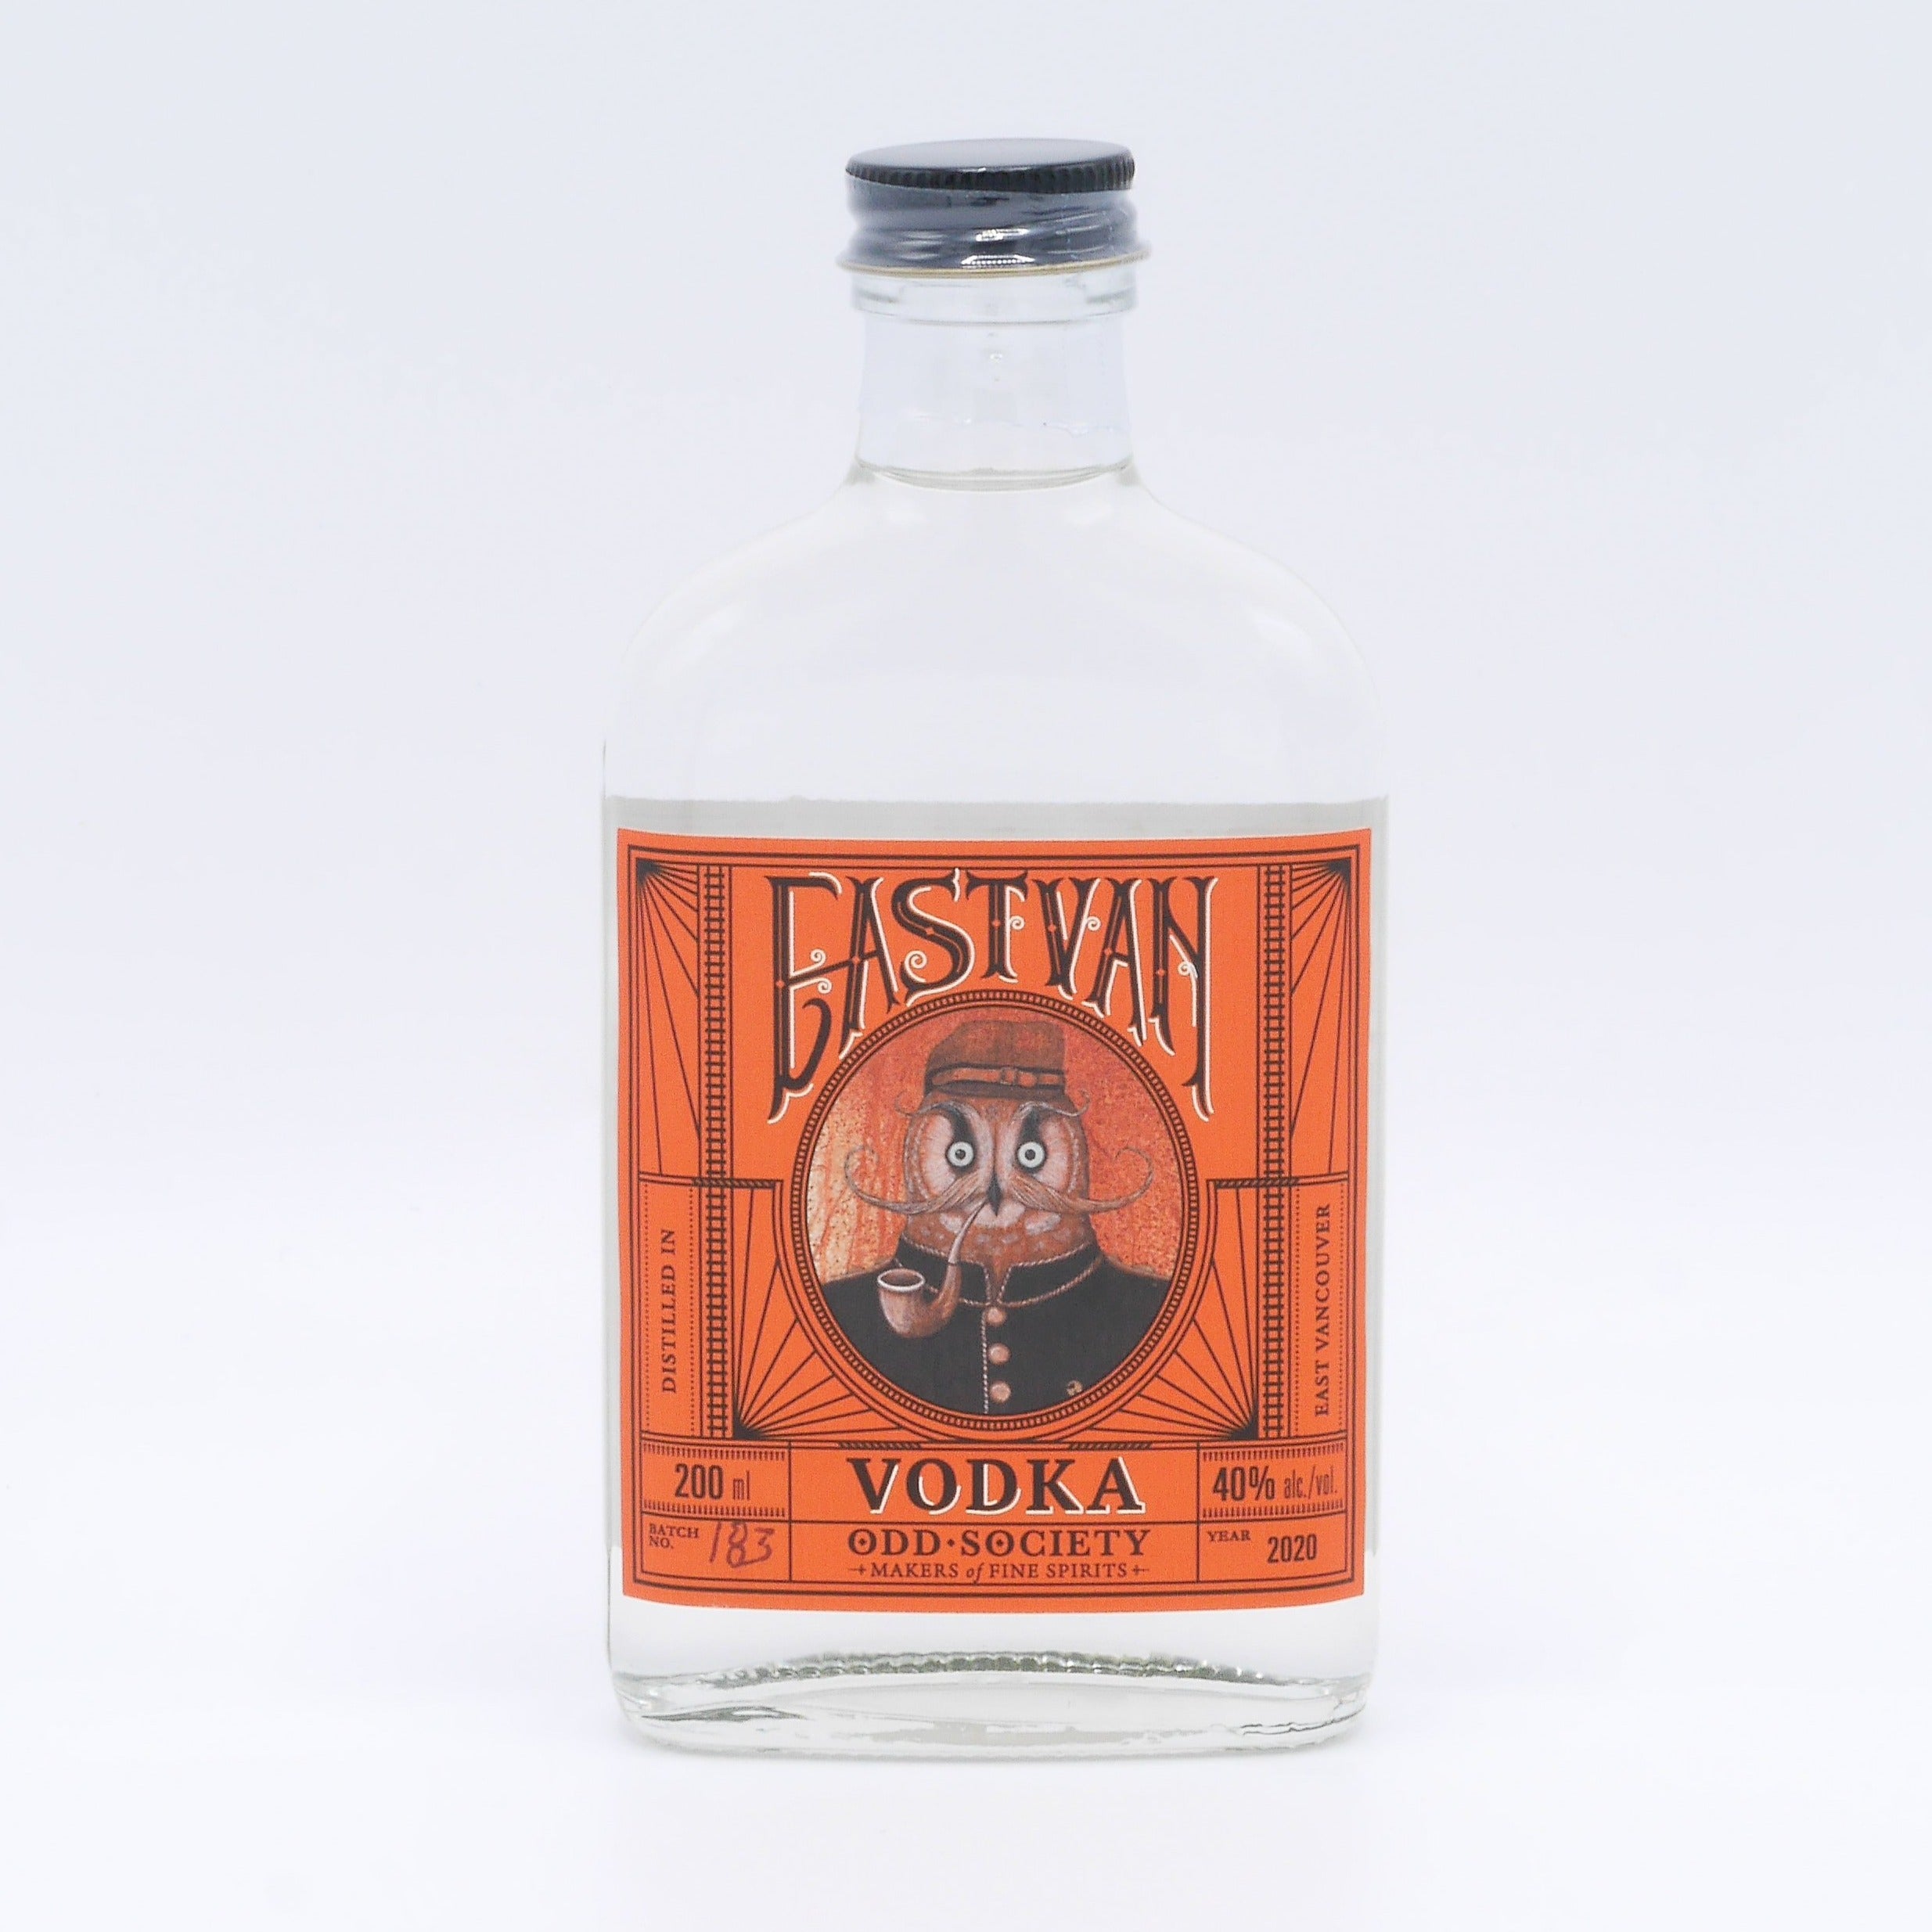 East Van Vodka 200 ml